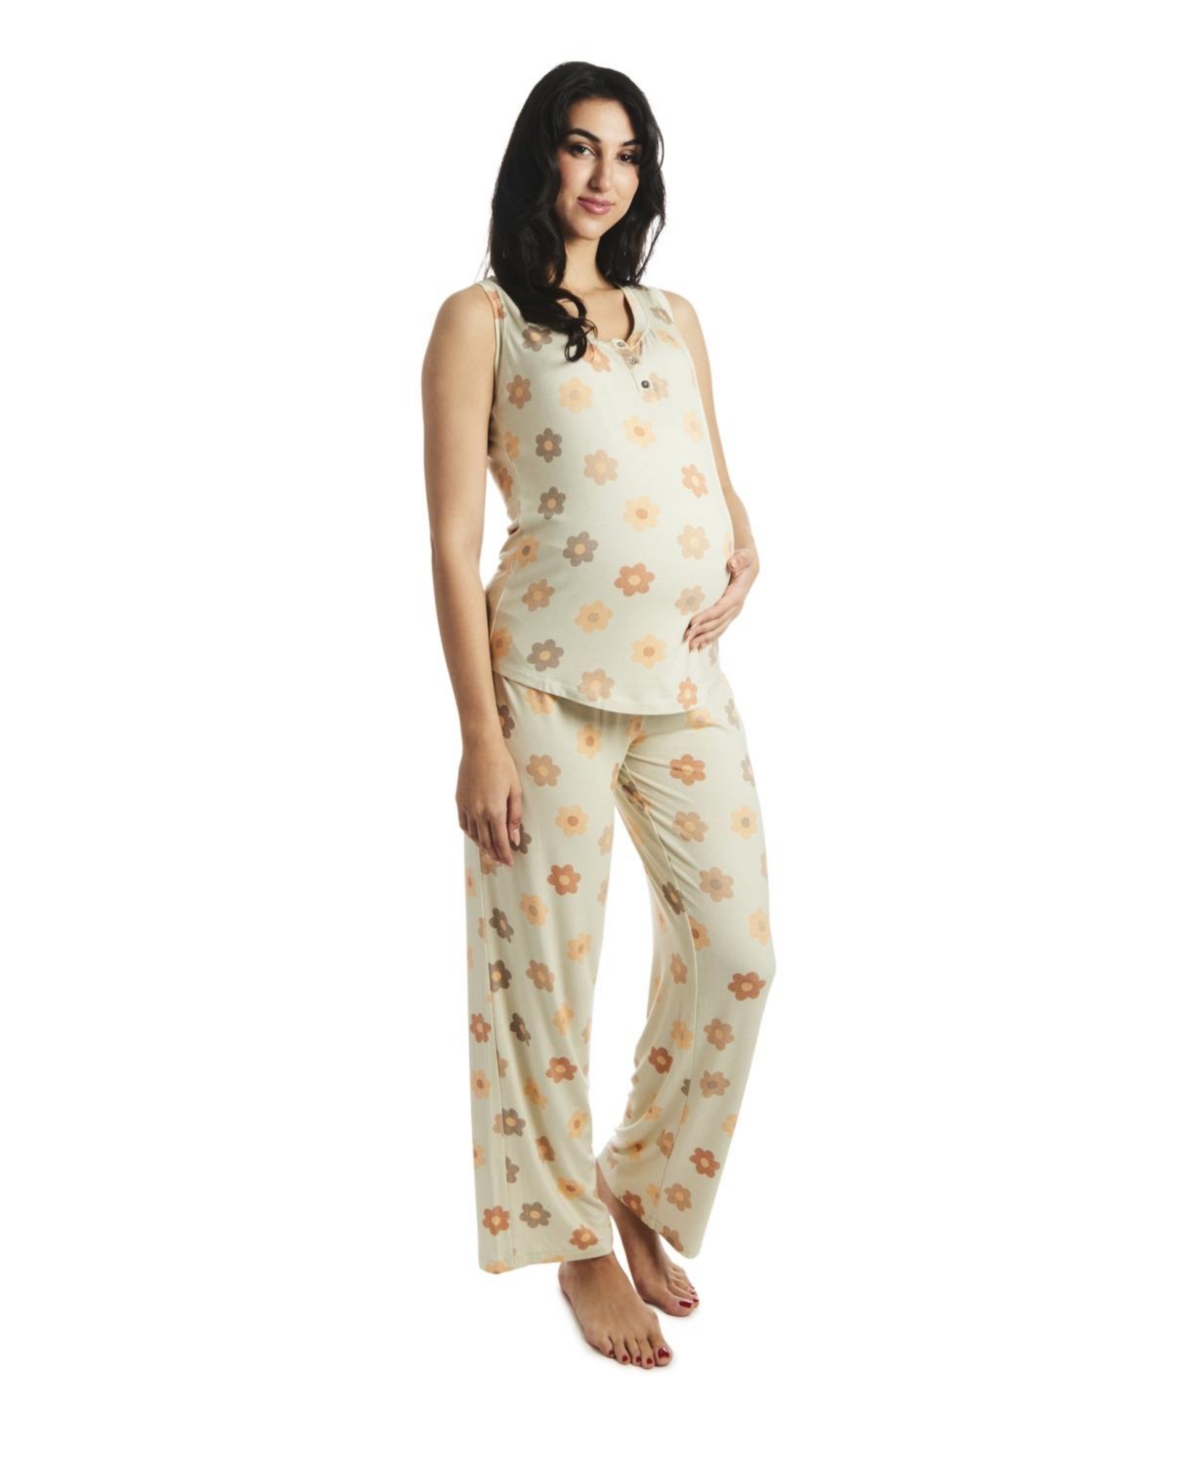 Women's Everly Grey Joy Tank & Pants Maternity/Nursing Pajama Set - Bali